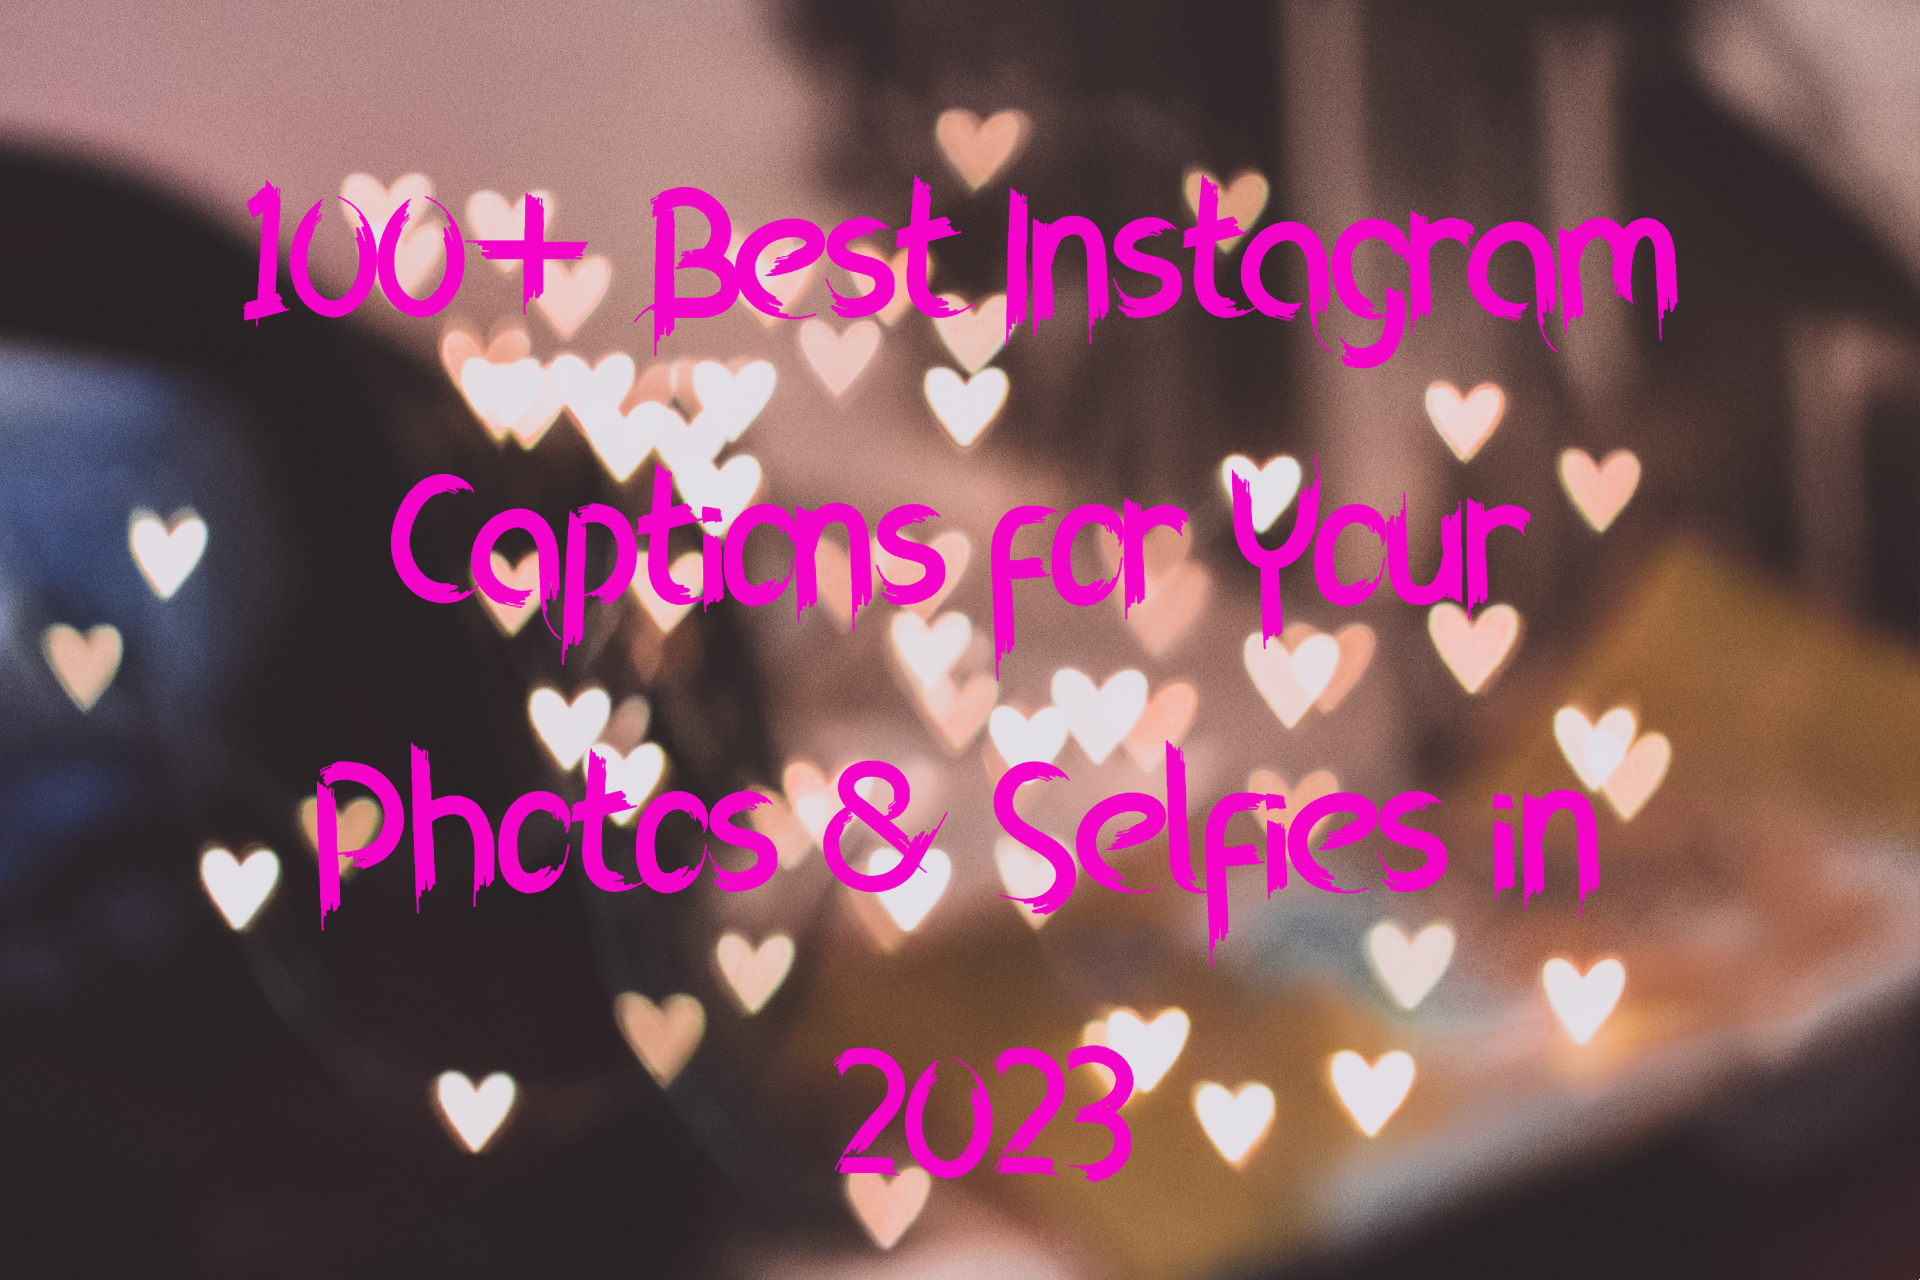 100+ Best Instagram Captions for Your Photos & Selfies in 2023